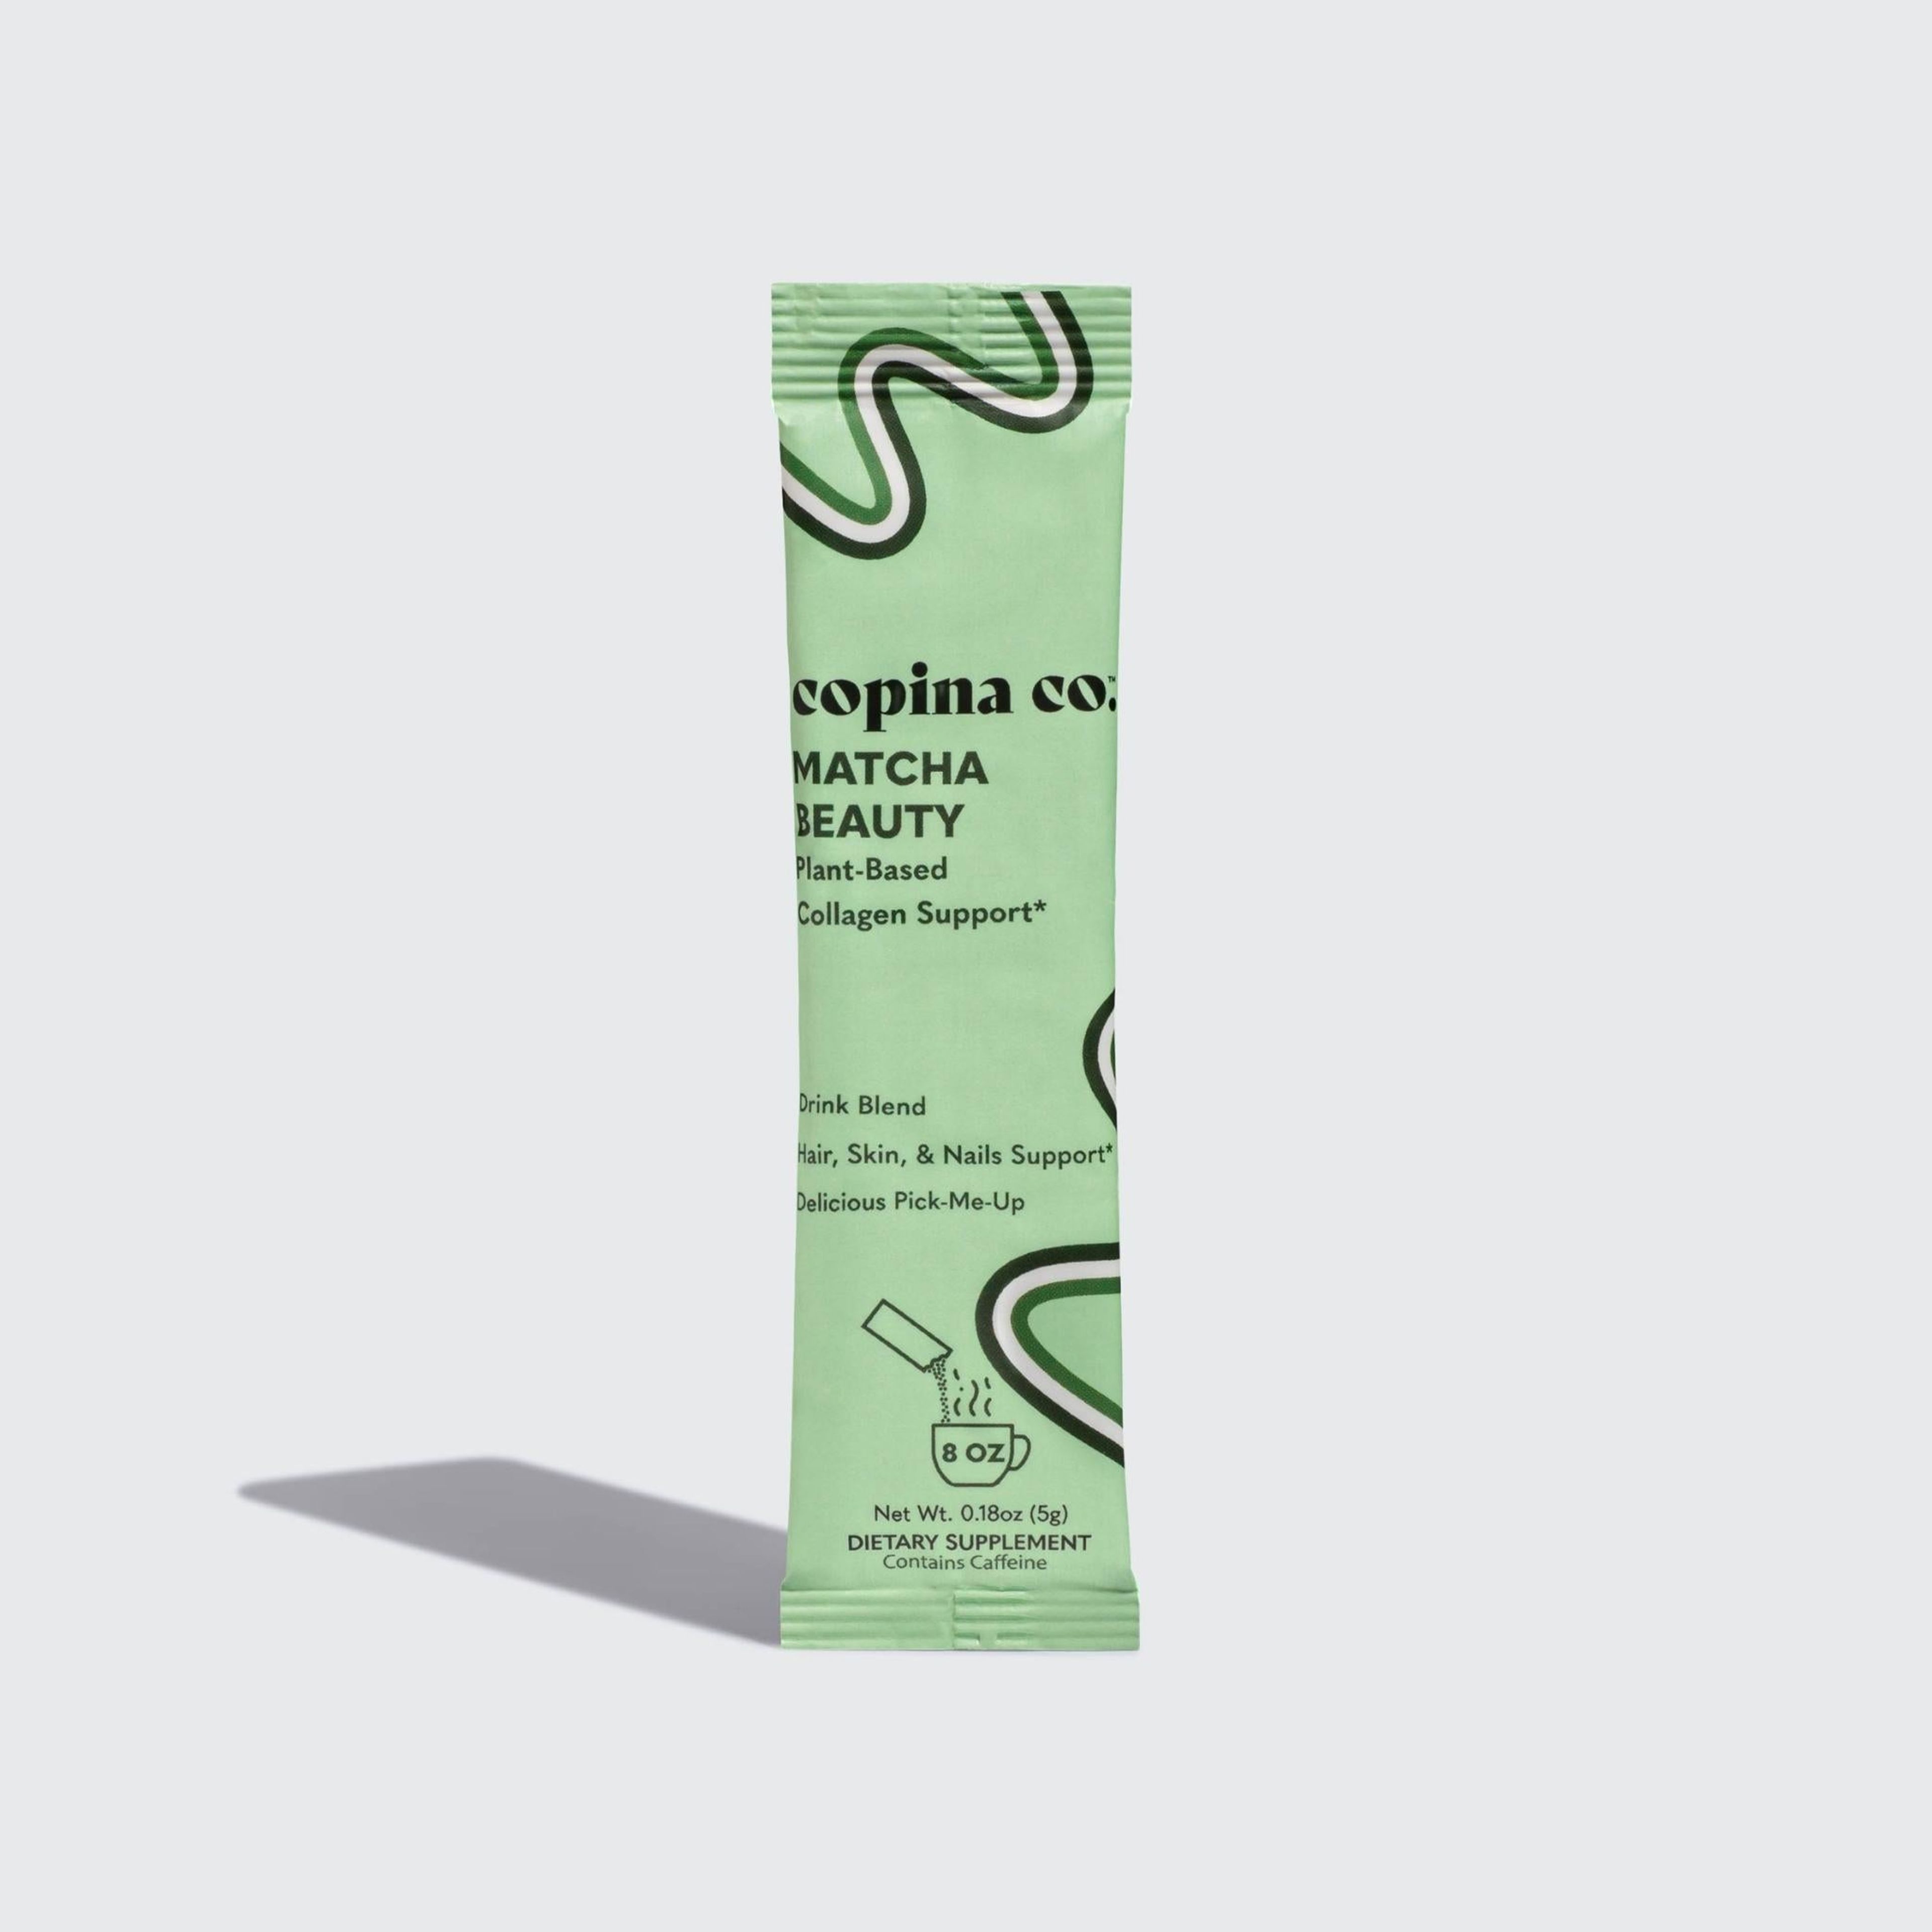 Matcha Beauty Plant-Based Collagen Support Drink Blend Stick Packs